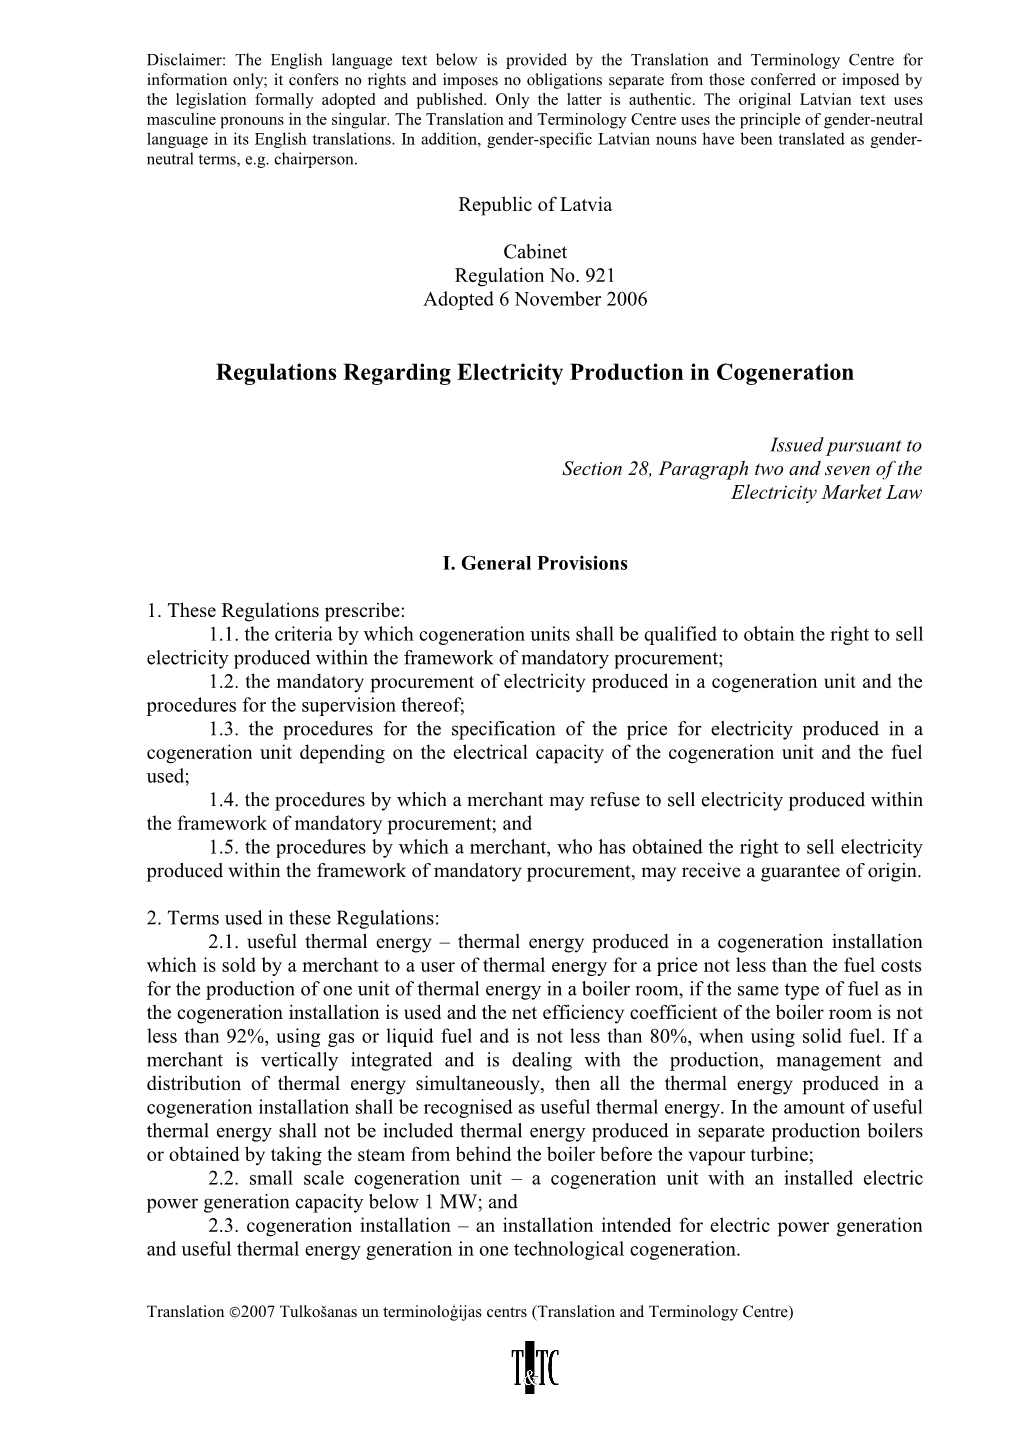 Regulations Regarding Electricity Production in Cogeneration